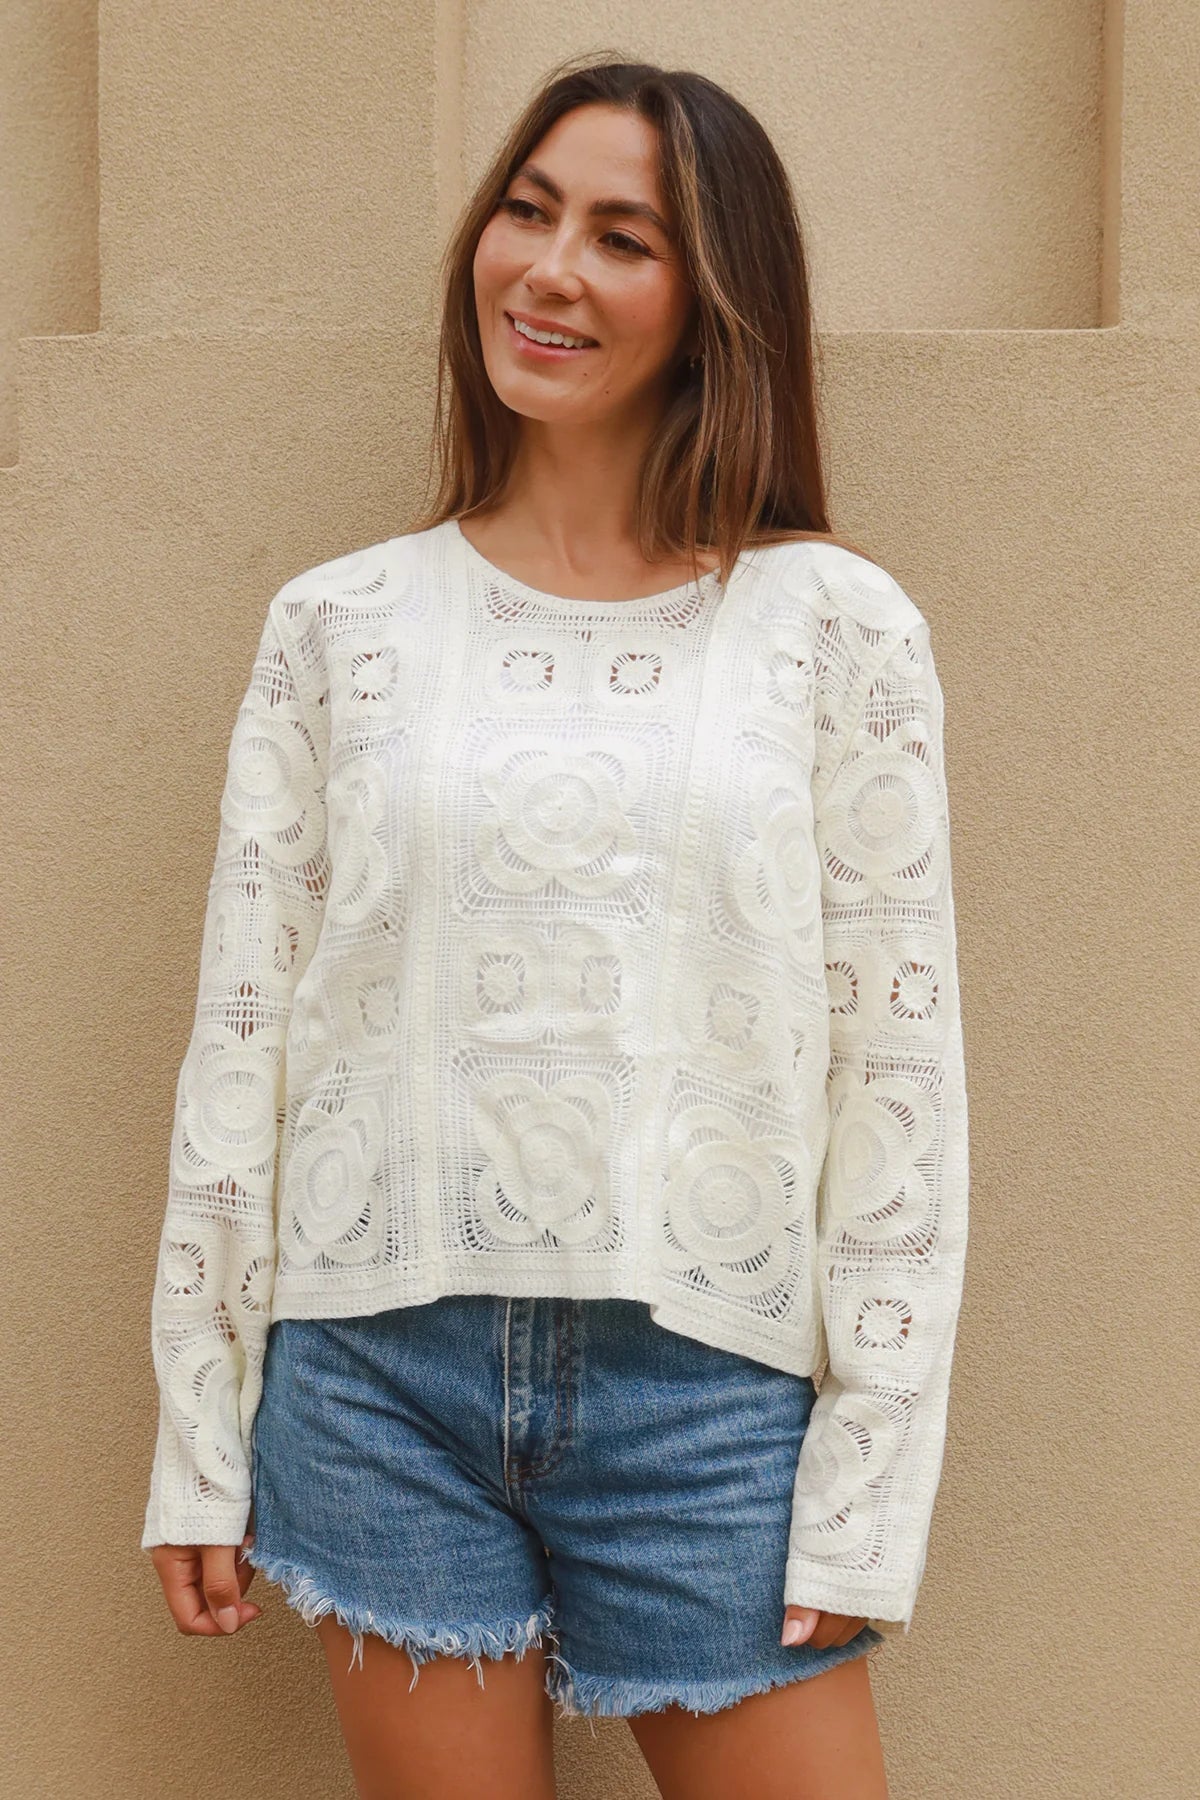 Cleo Crochet Top - White